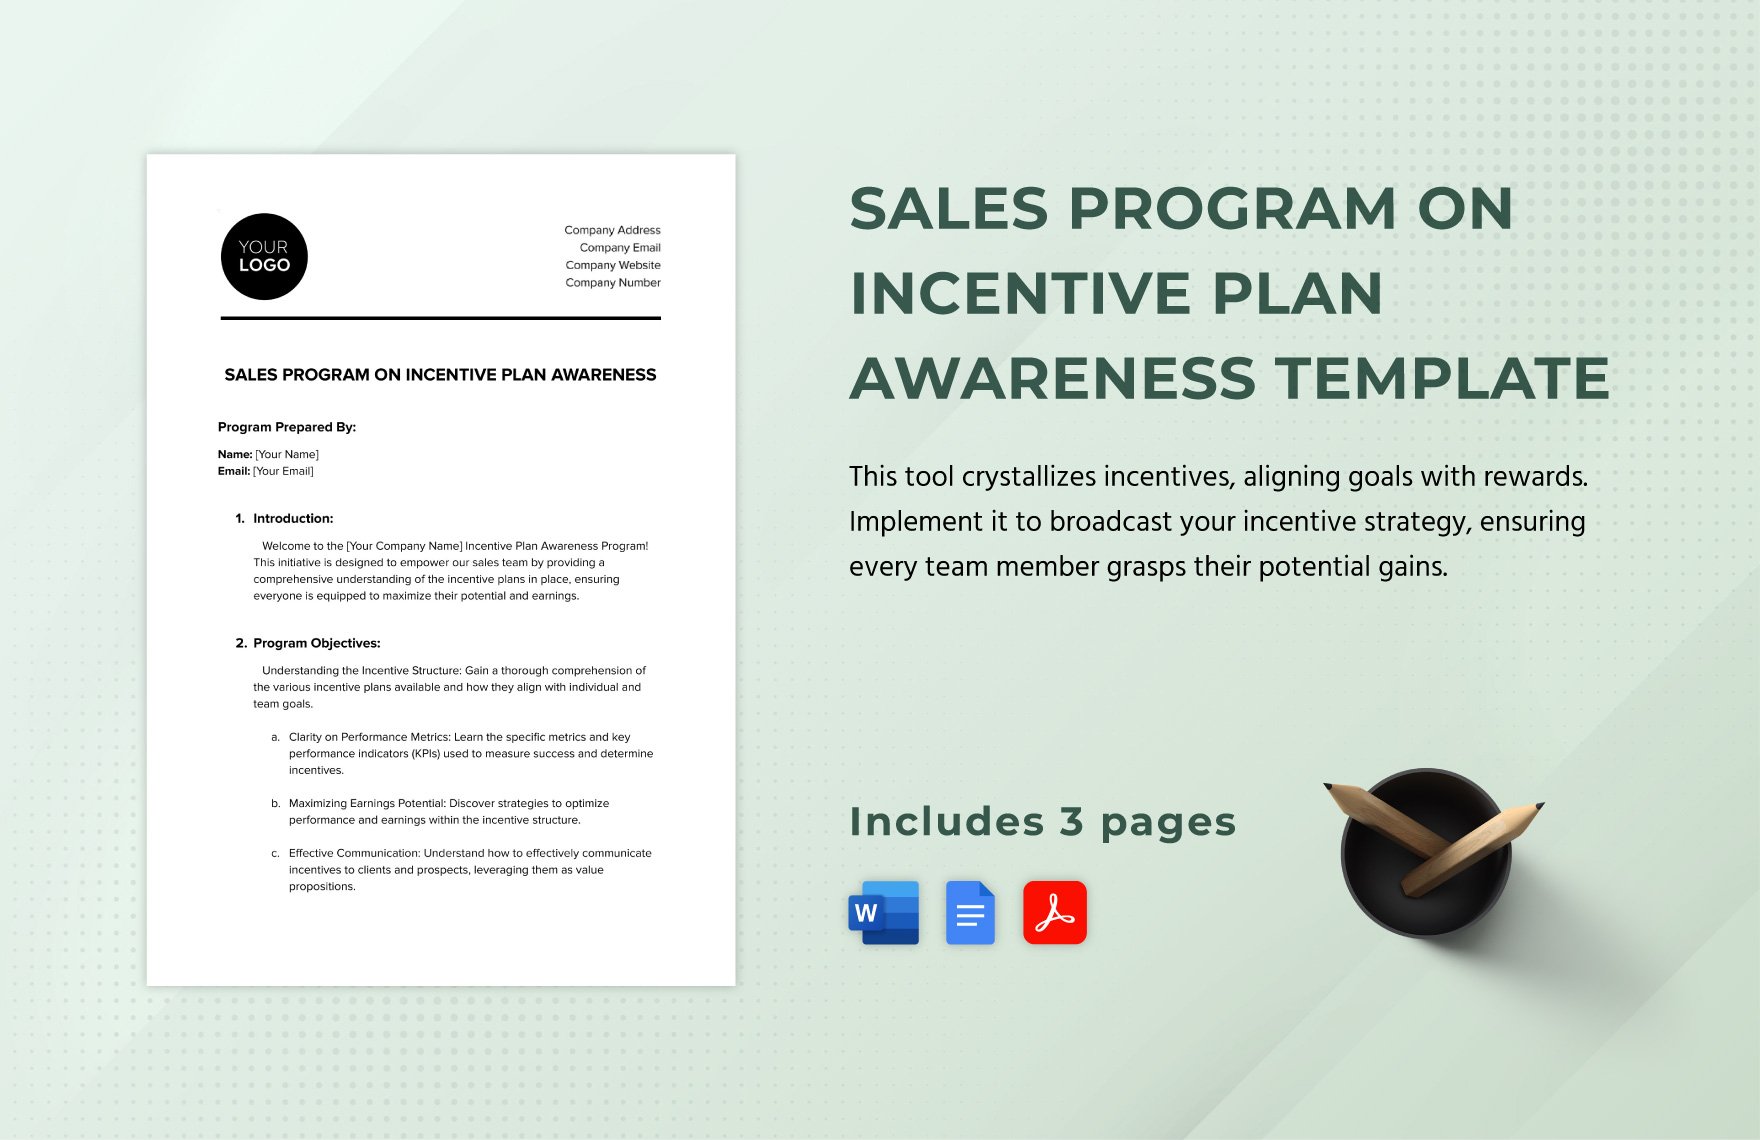 Sales Program on Incentive Plan Awareness Template